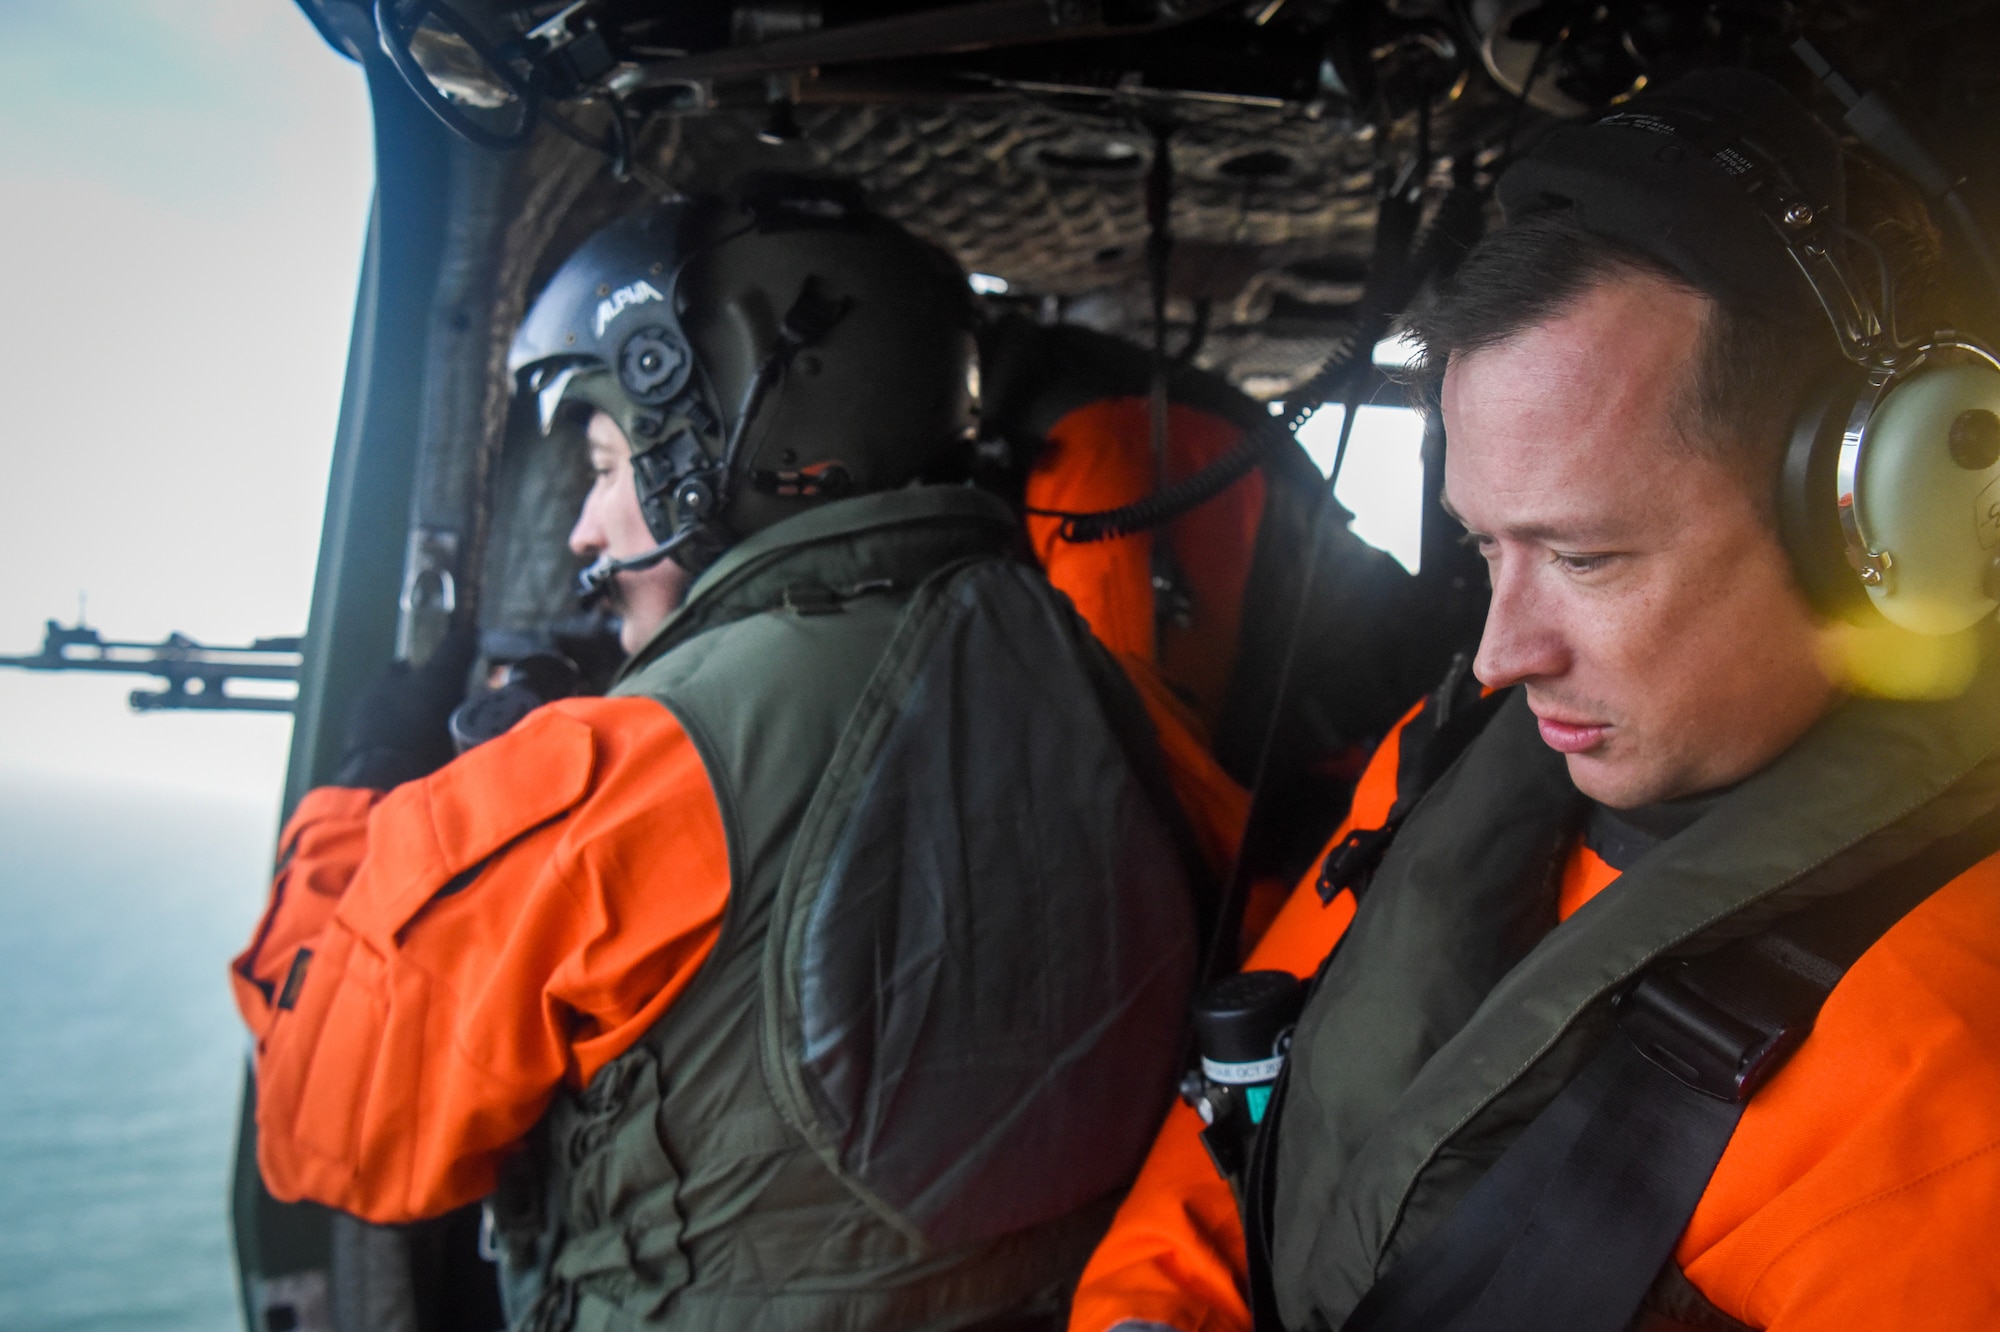 Irish and U.S. aircrew riding in AW139